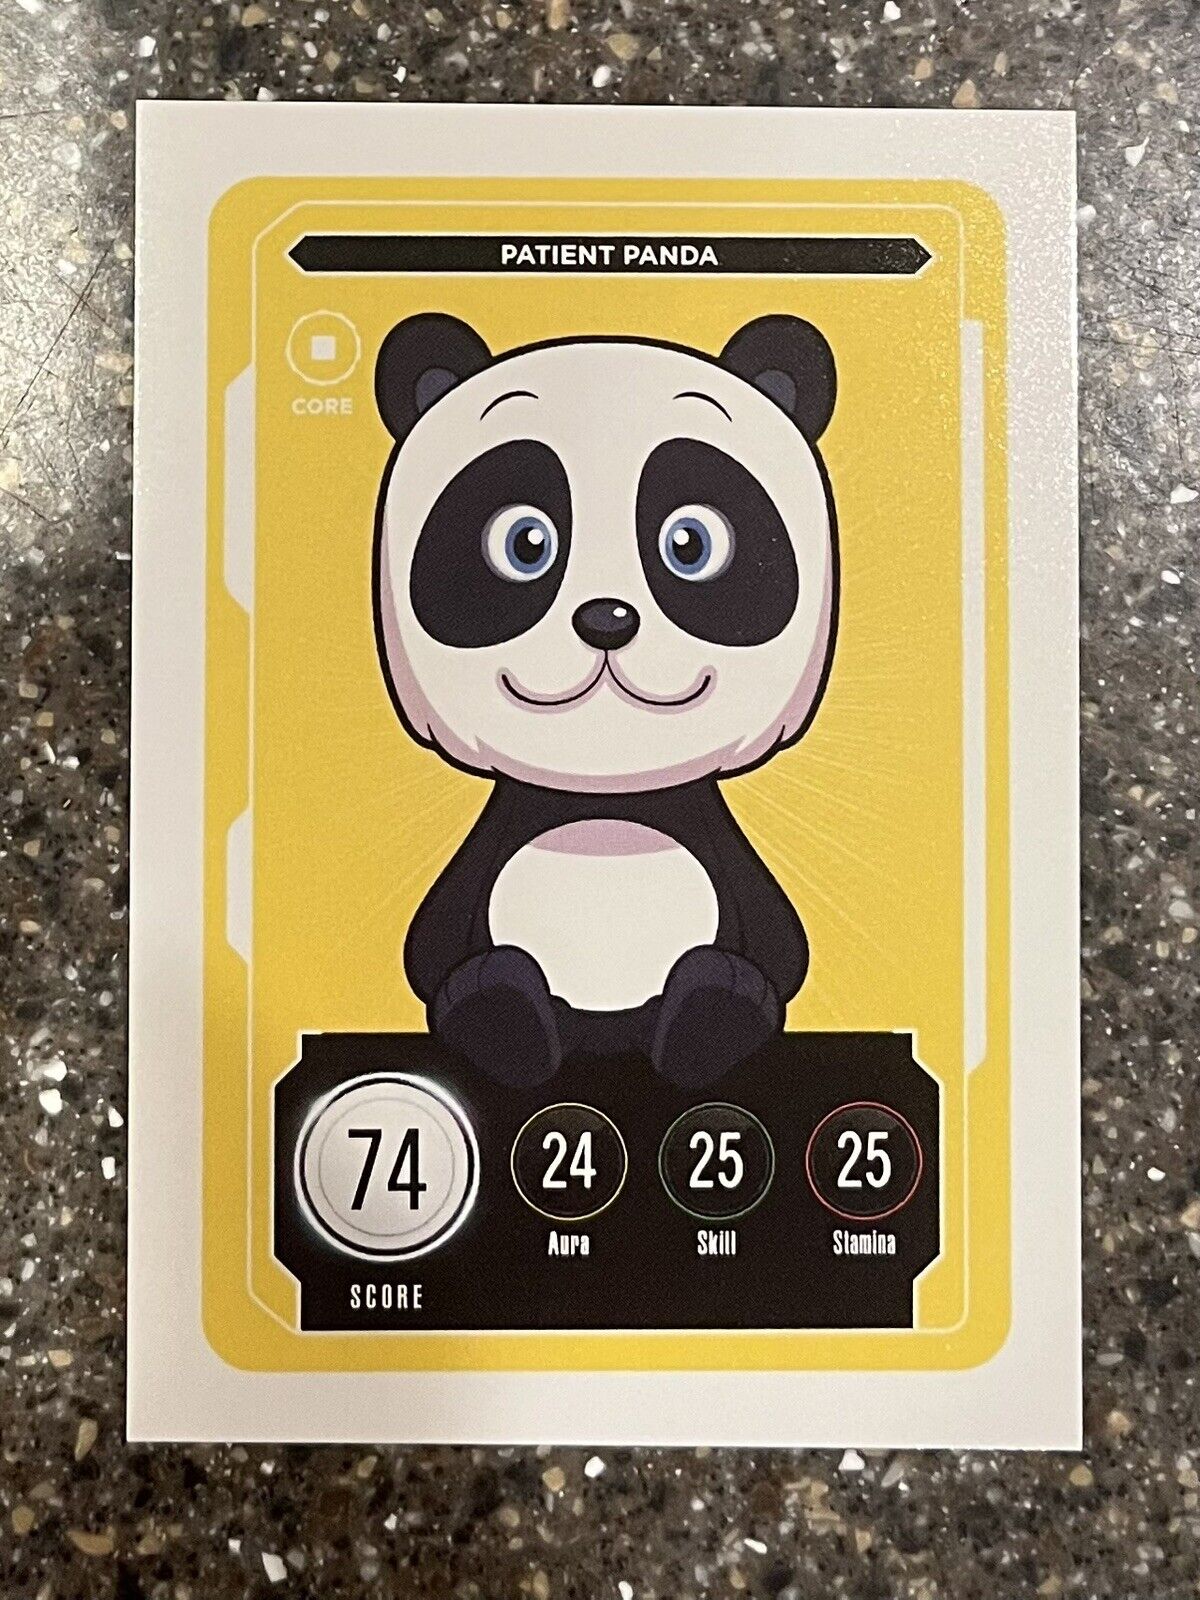 Patient Panda Core Veefriends Series 2 Compete and Collect